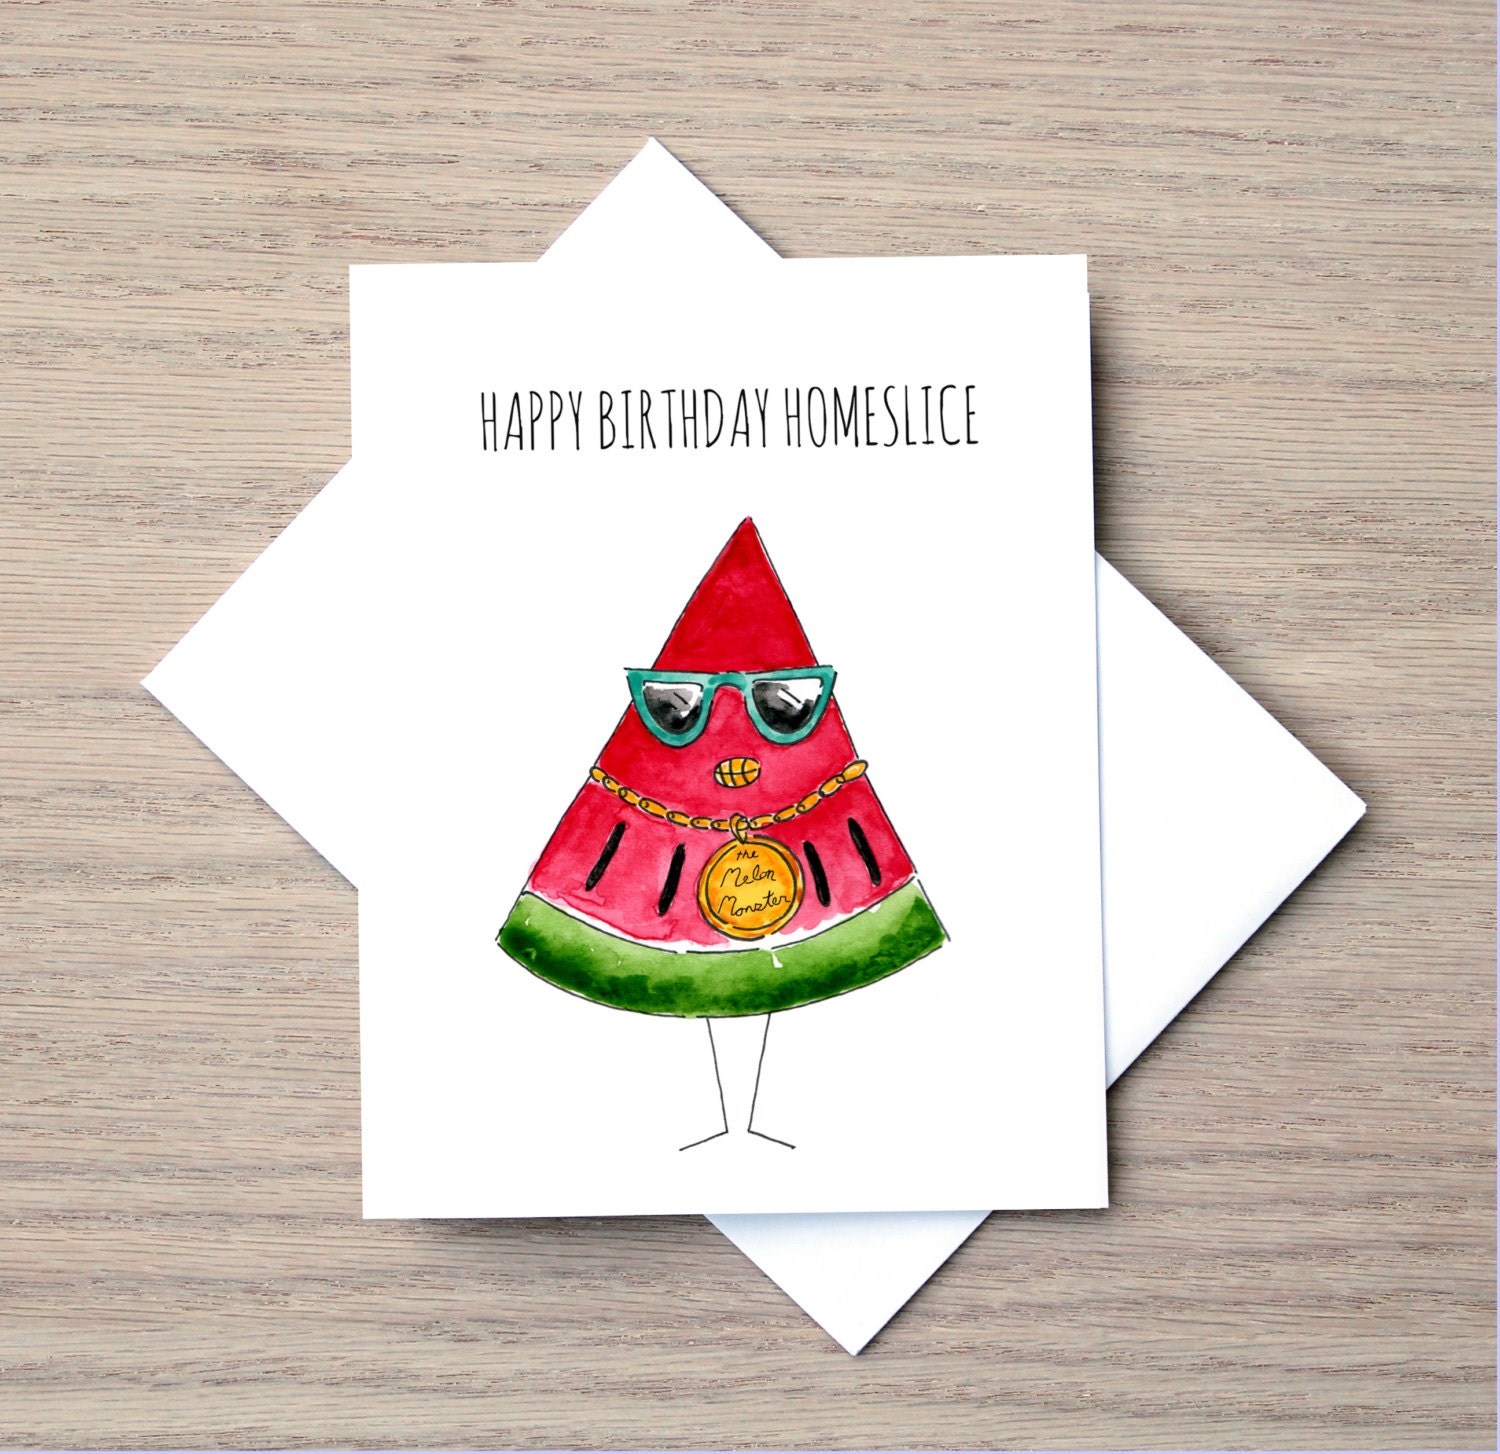 watermelon-birthday-card-watermelon-card-funny-birthday